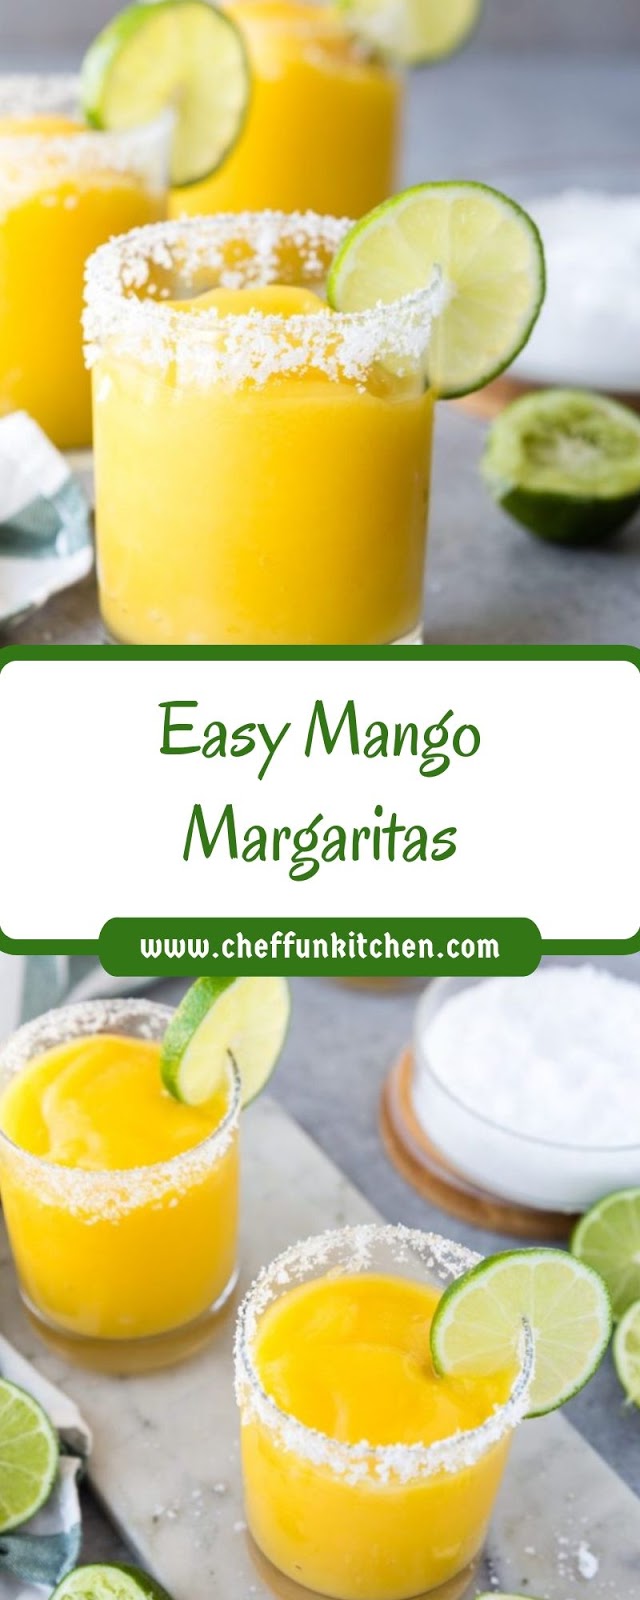 Easy Mango Margaritas